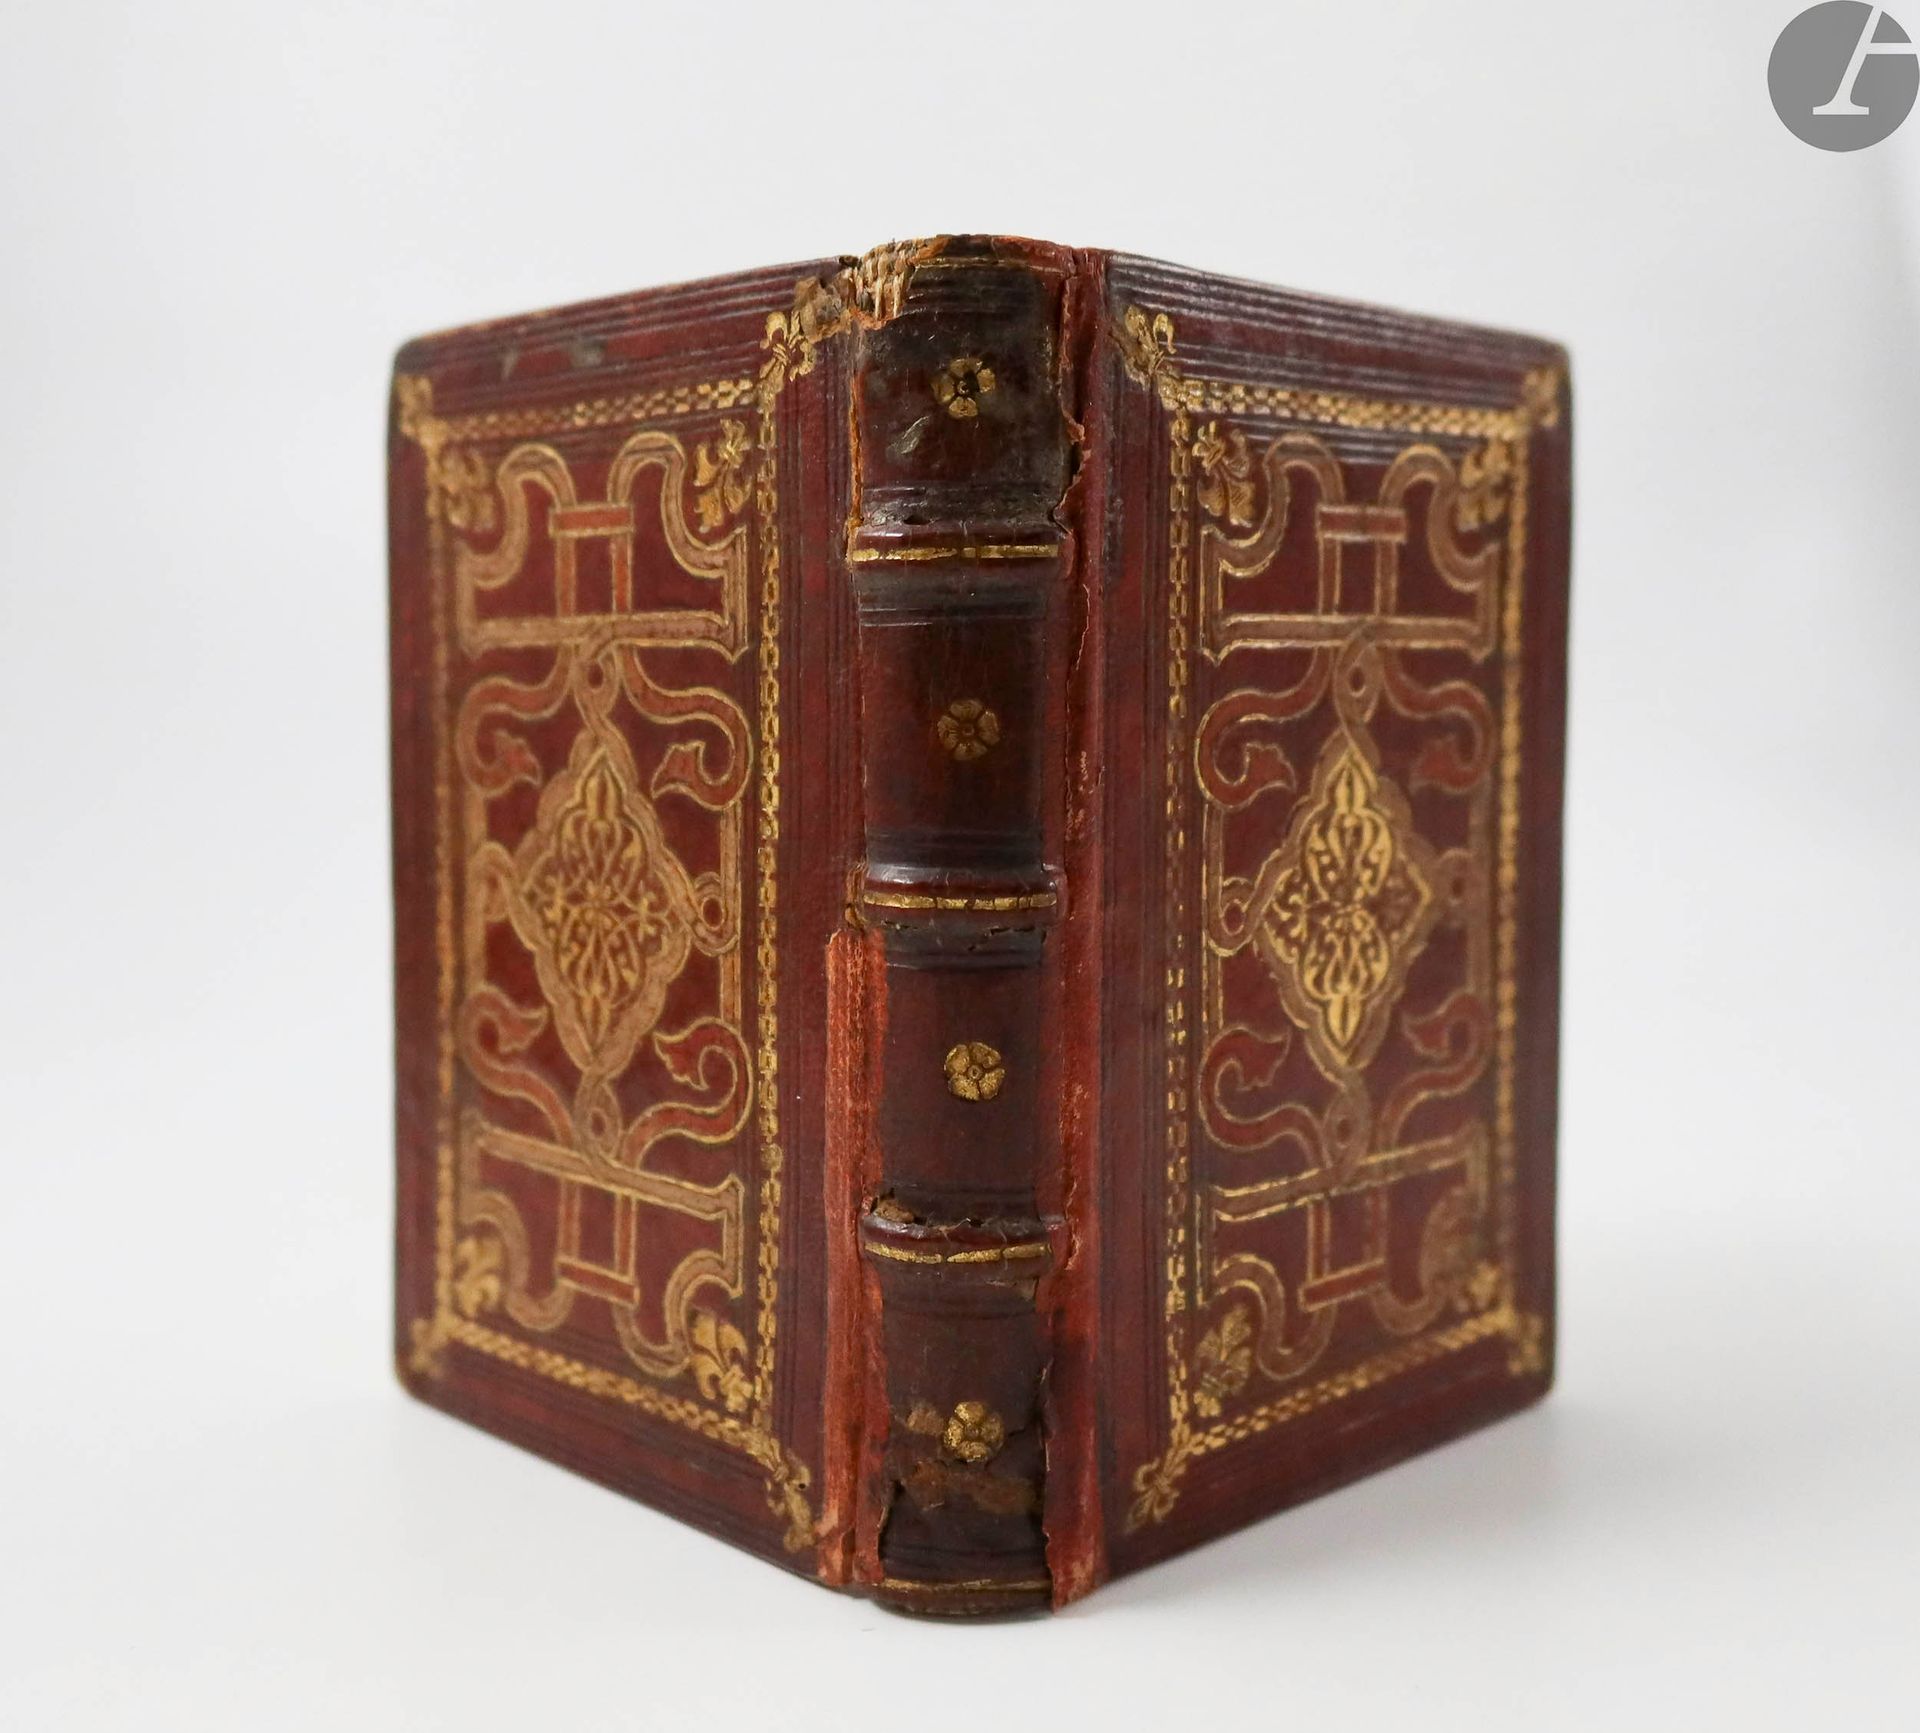 OVID。 Metamorphoseon libri XV. 安特卫普：克里斯托夫-普朗坦，1582年。- 16开本，红色摩洛哥，书板上装饰着中央的鎏金芙蓉，镶&hellip;